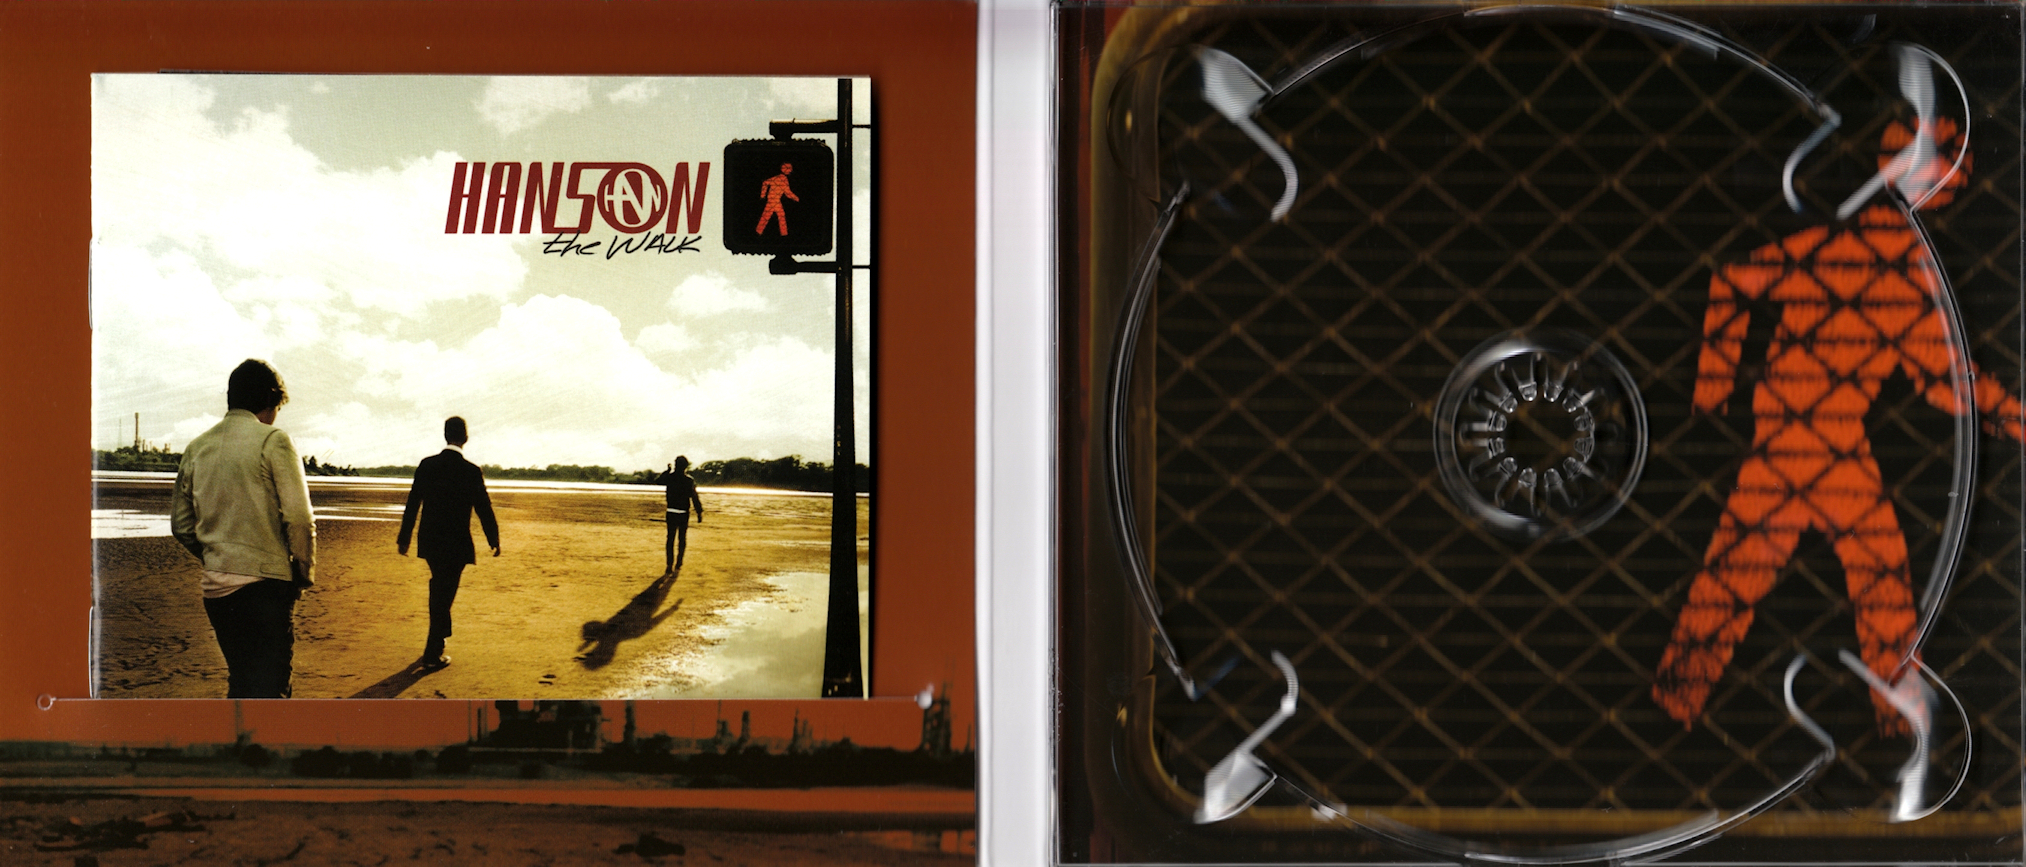 HANSON - The Walk -  Music